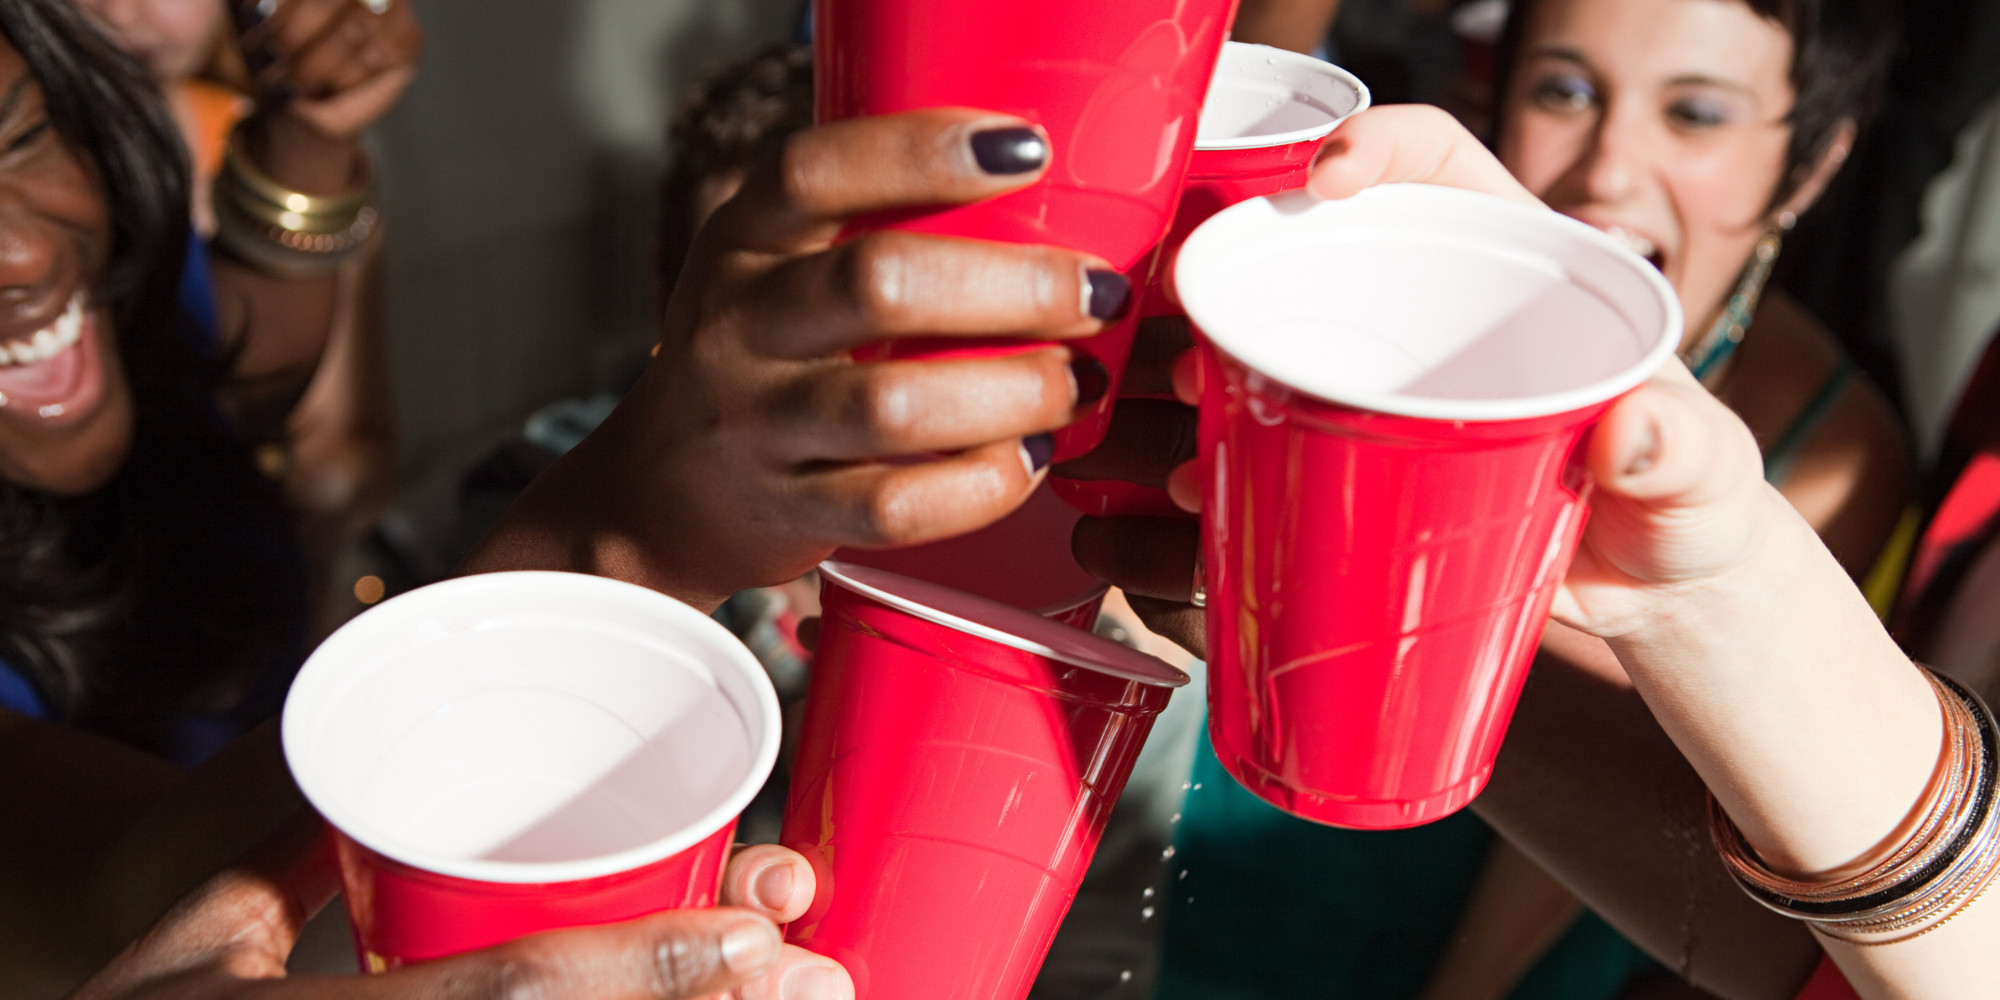 The Collegiate Contradiction of Alcohol Consumption